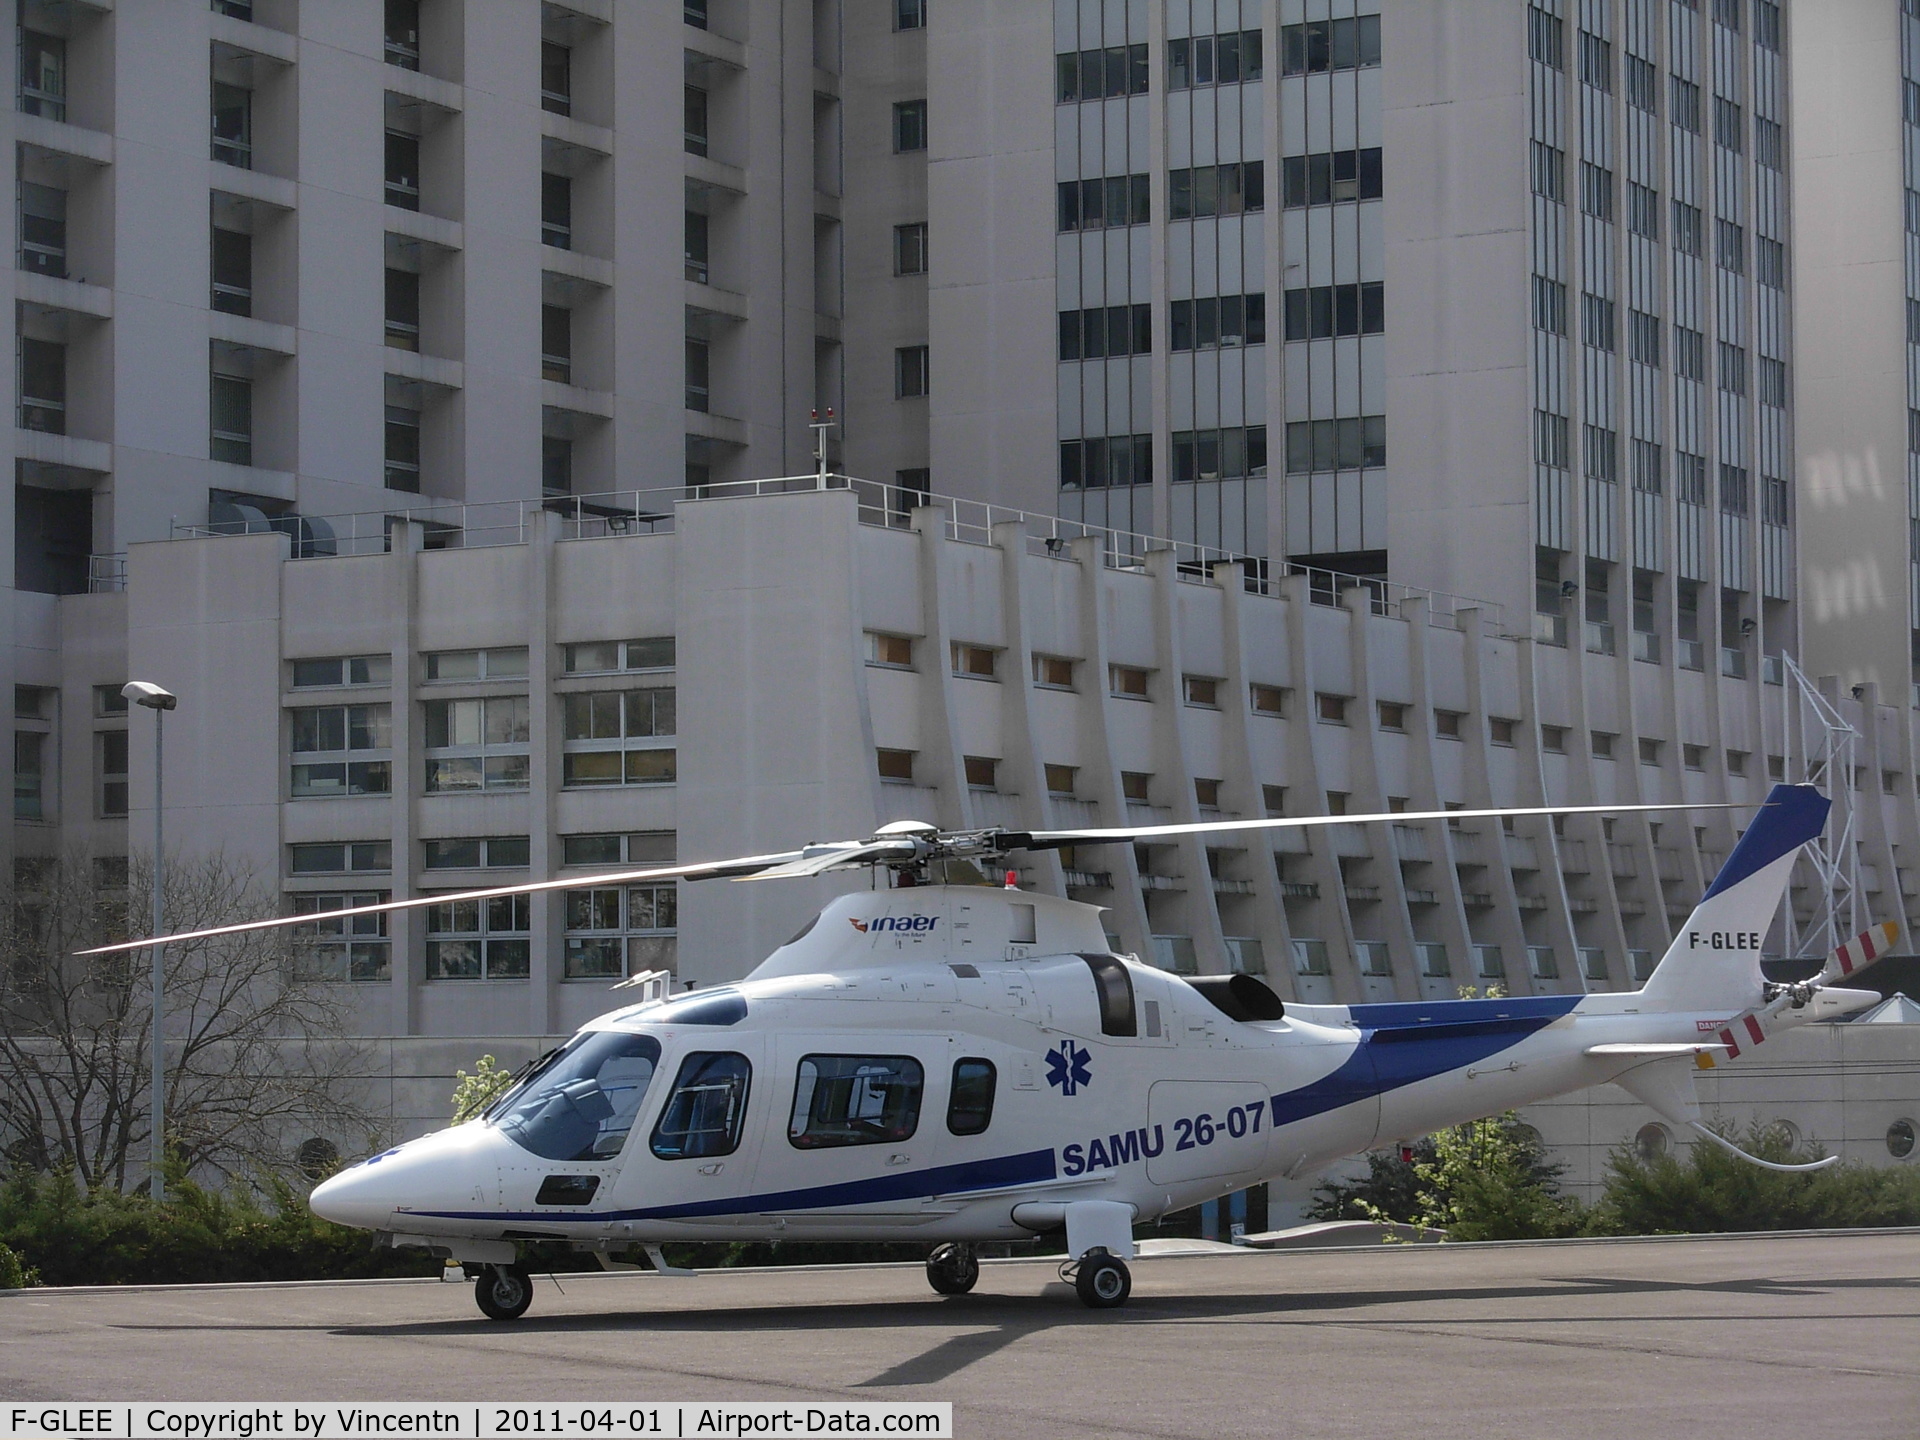 F-GLEE, 2004 Agusta A-109E Power C/N 11603, Grenoble hospital, April 2011

INAER